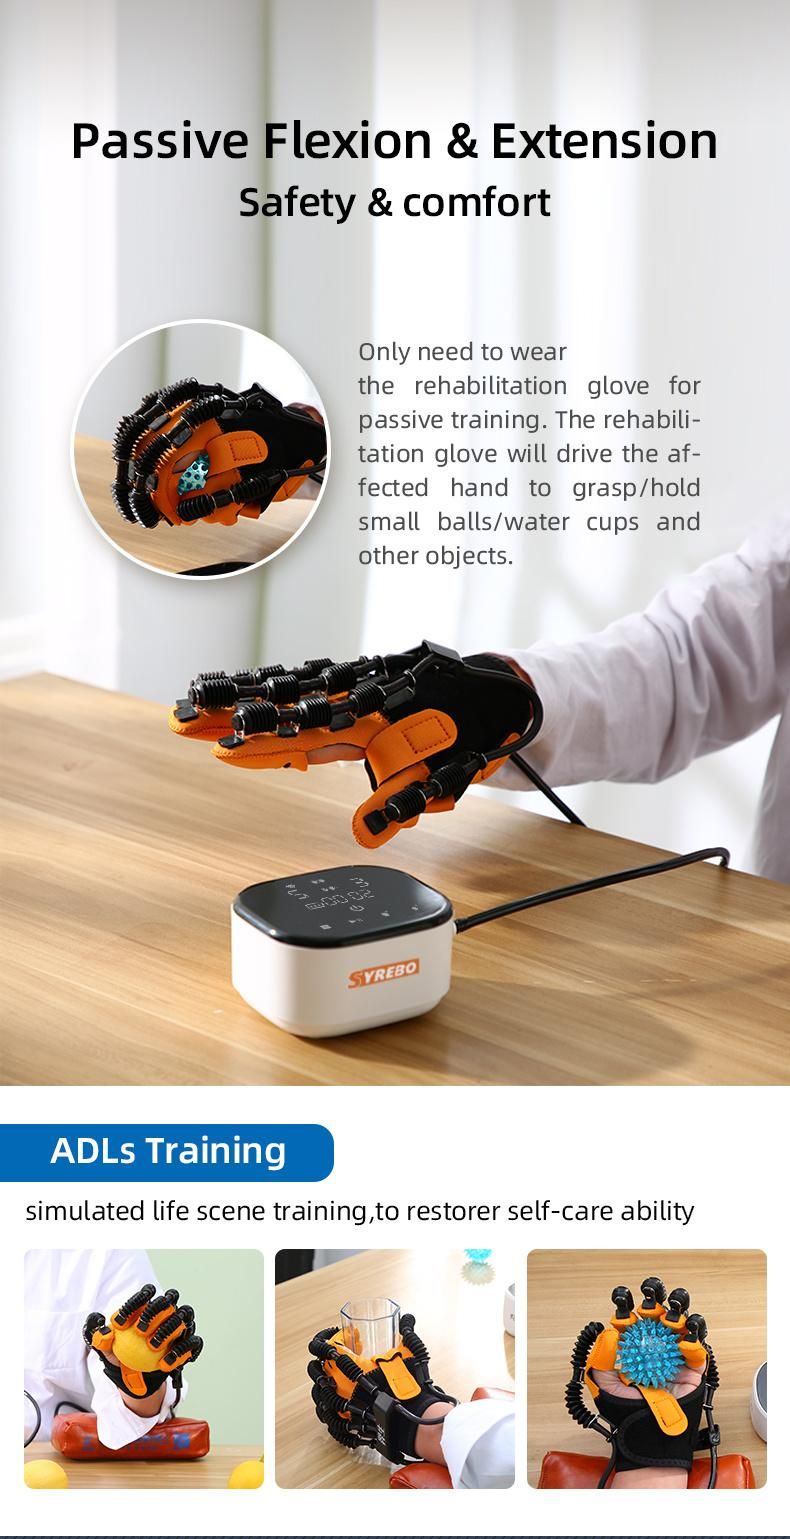 Syrebo Rehabilitation Robotics Glove Innovative Mirror Training Promotes Proprioception in Hands